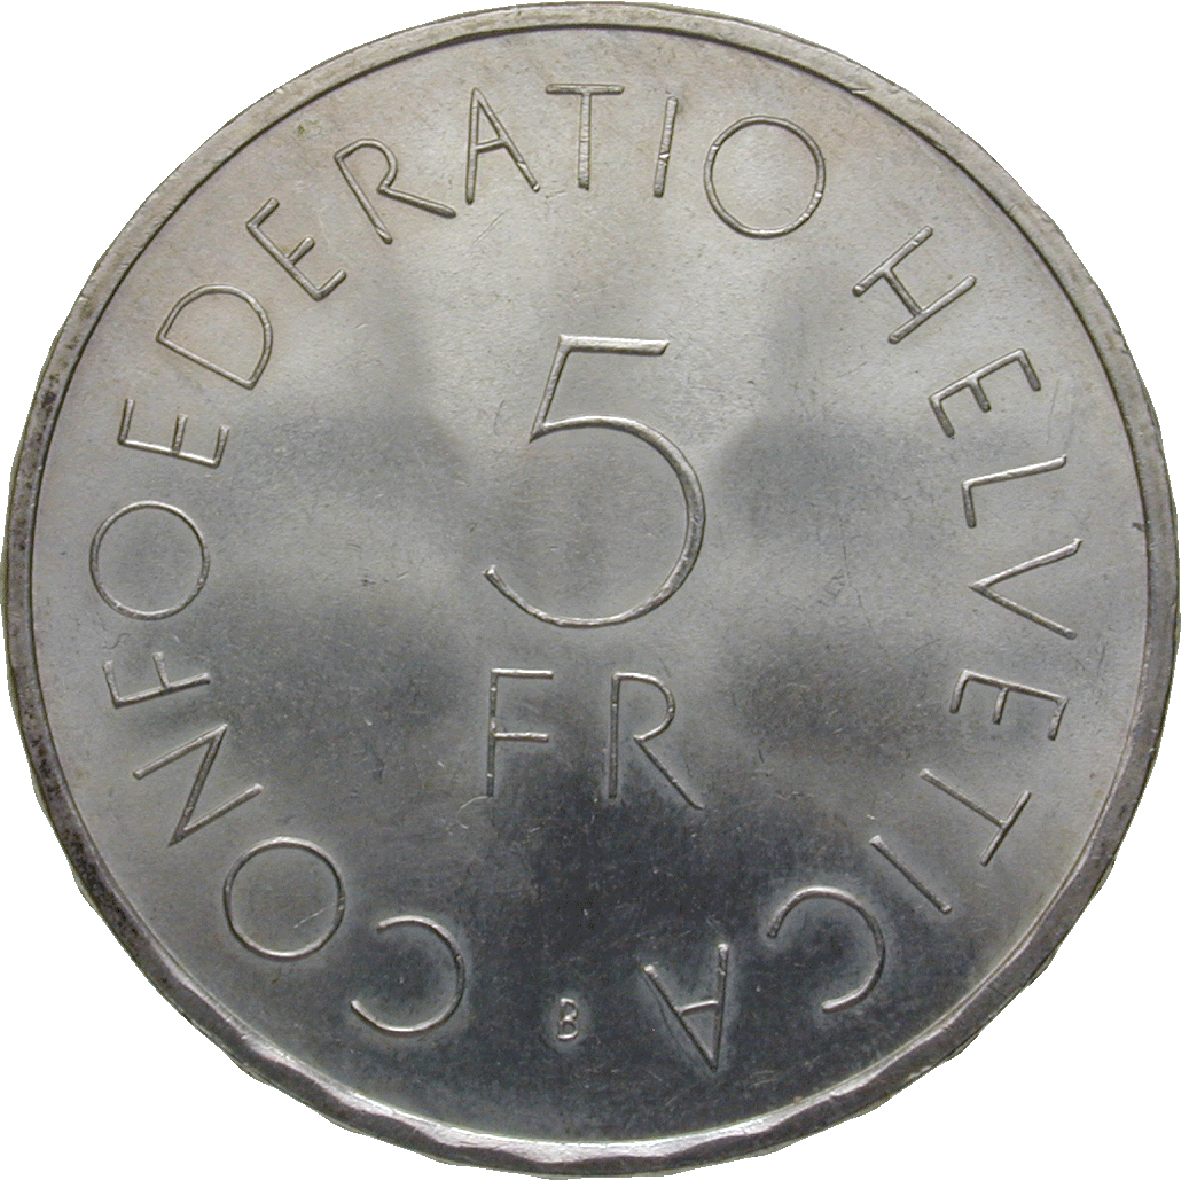 Schweizerische Eidgenossenschaft, 5 Franken 1963 (reverse)